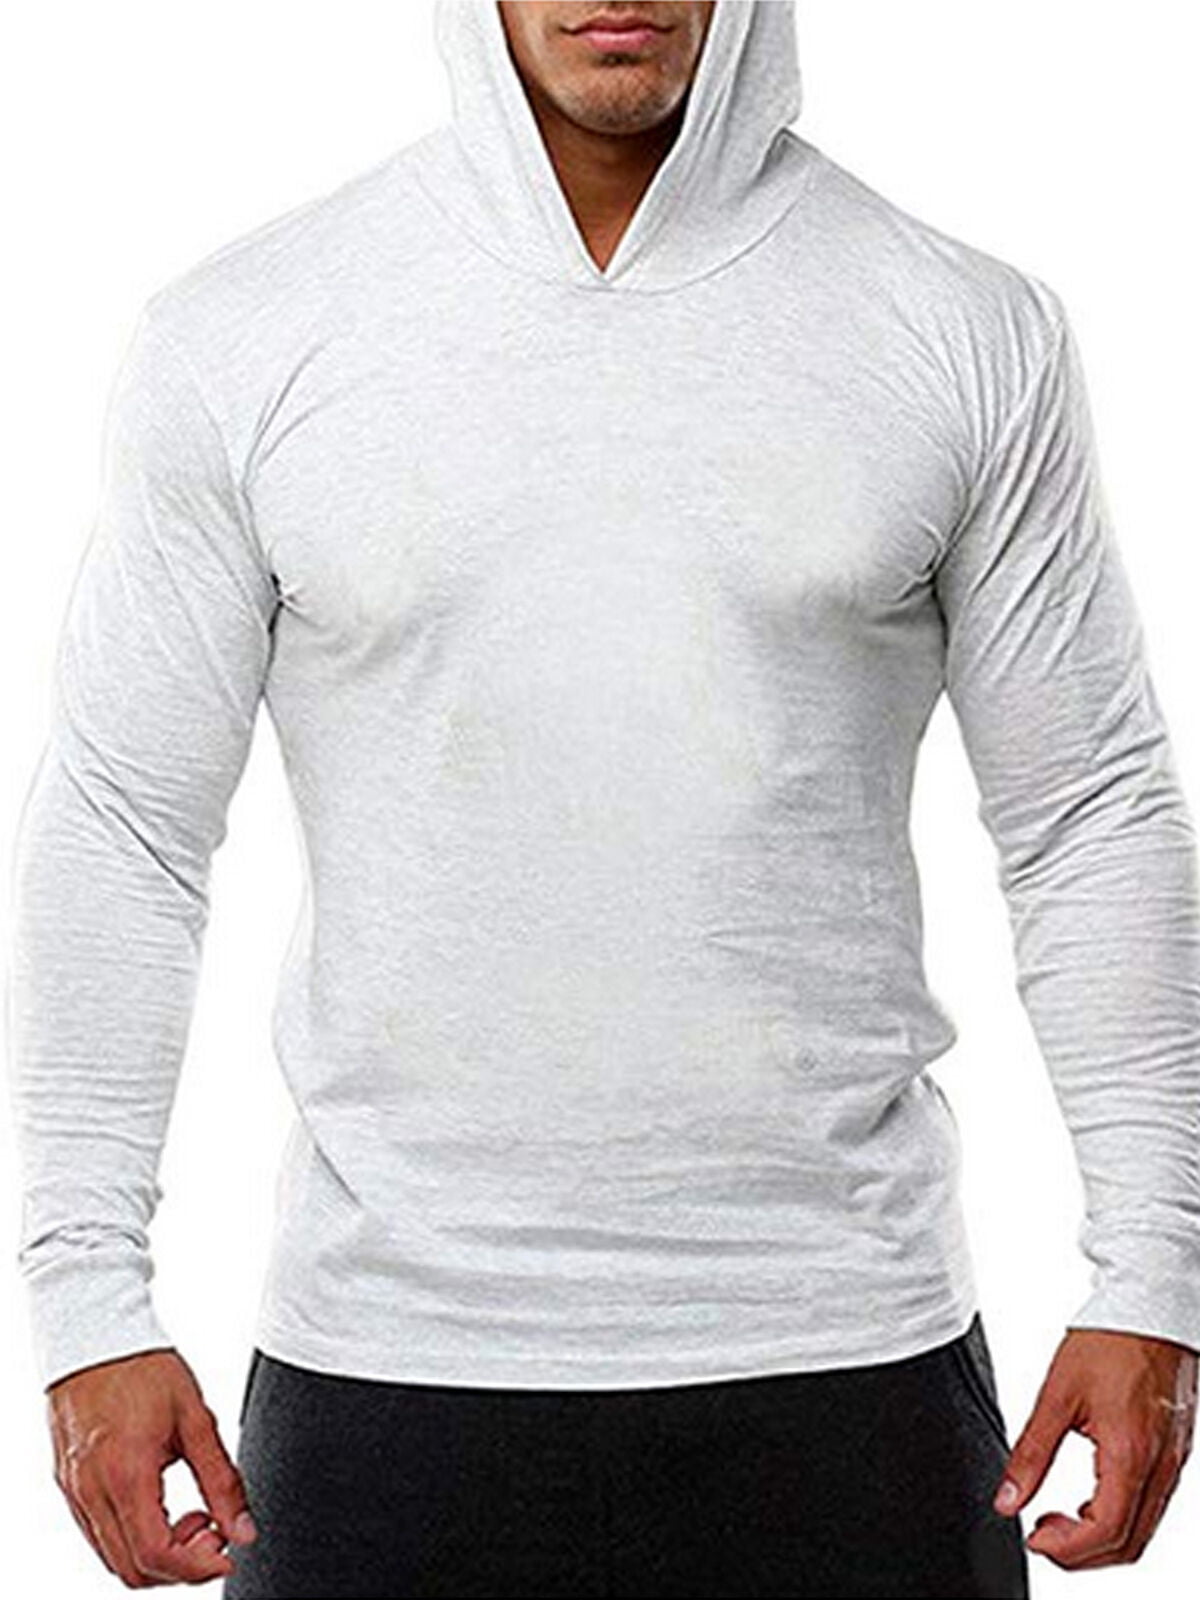 Luethbiezx - Men Muscle Basic Fit Hoodies Pullover Gym Long Sleeve ...